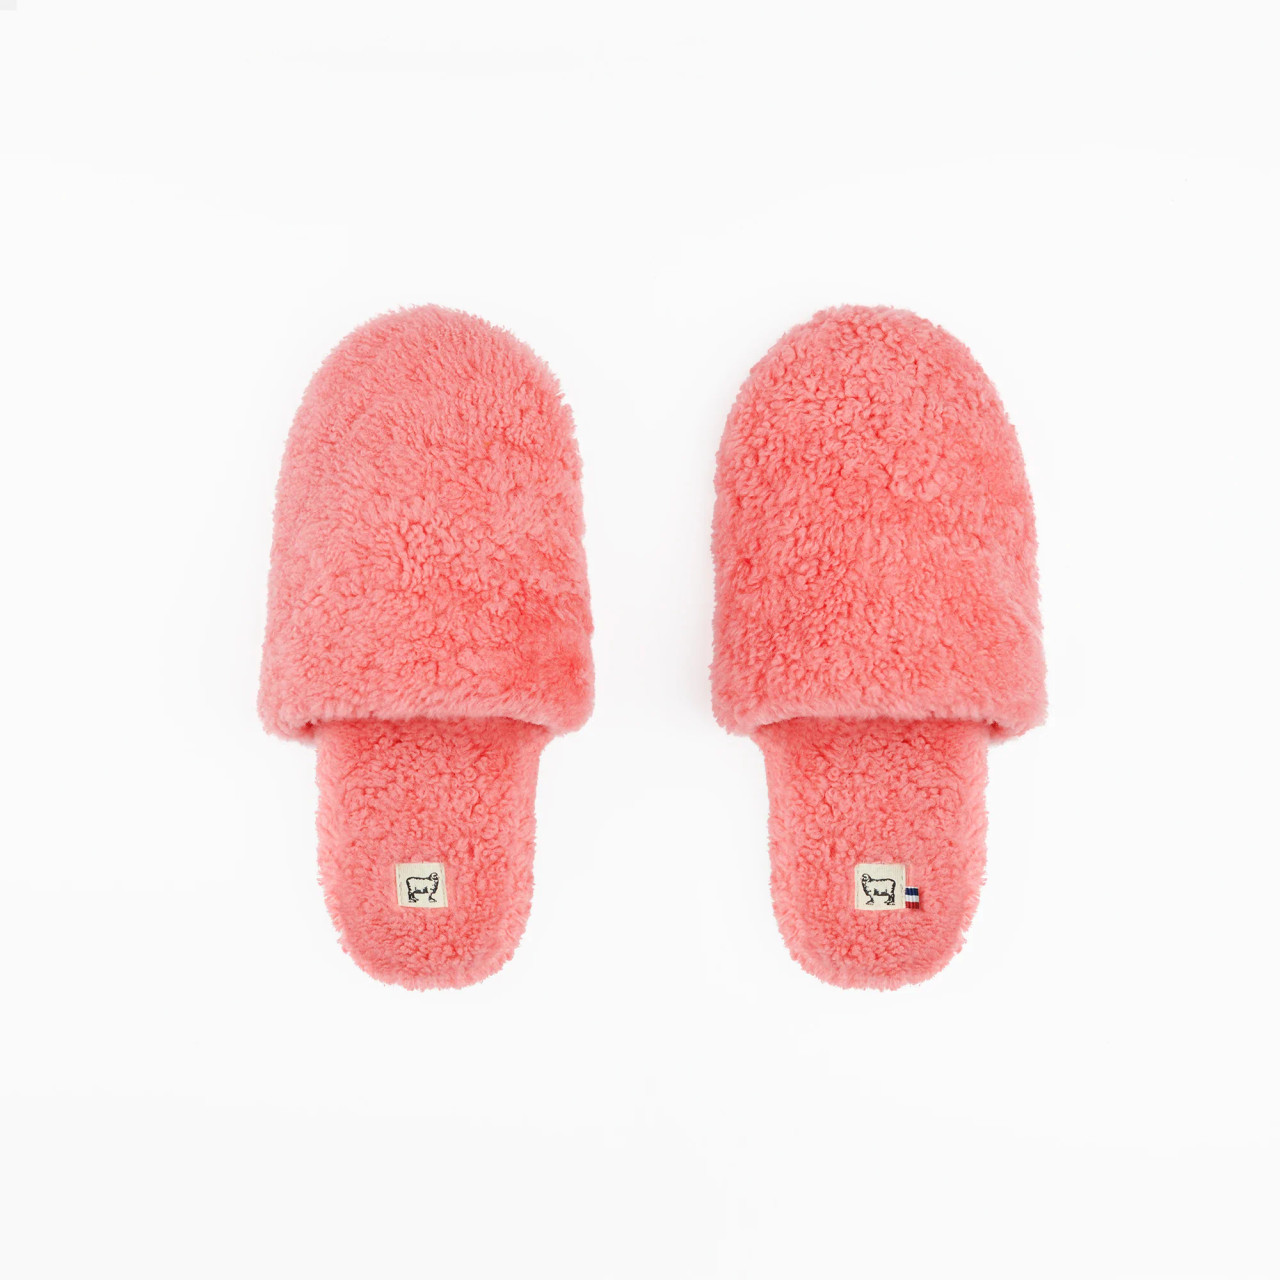 Toasties Paris: Sheepskin Bubblegum Pink Hotel Slippers, tomfoolery london